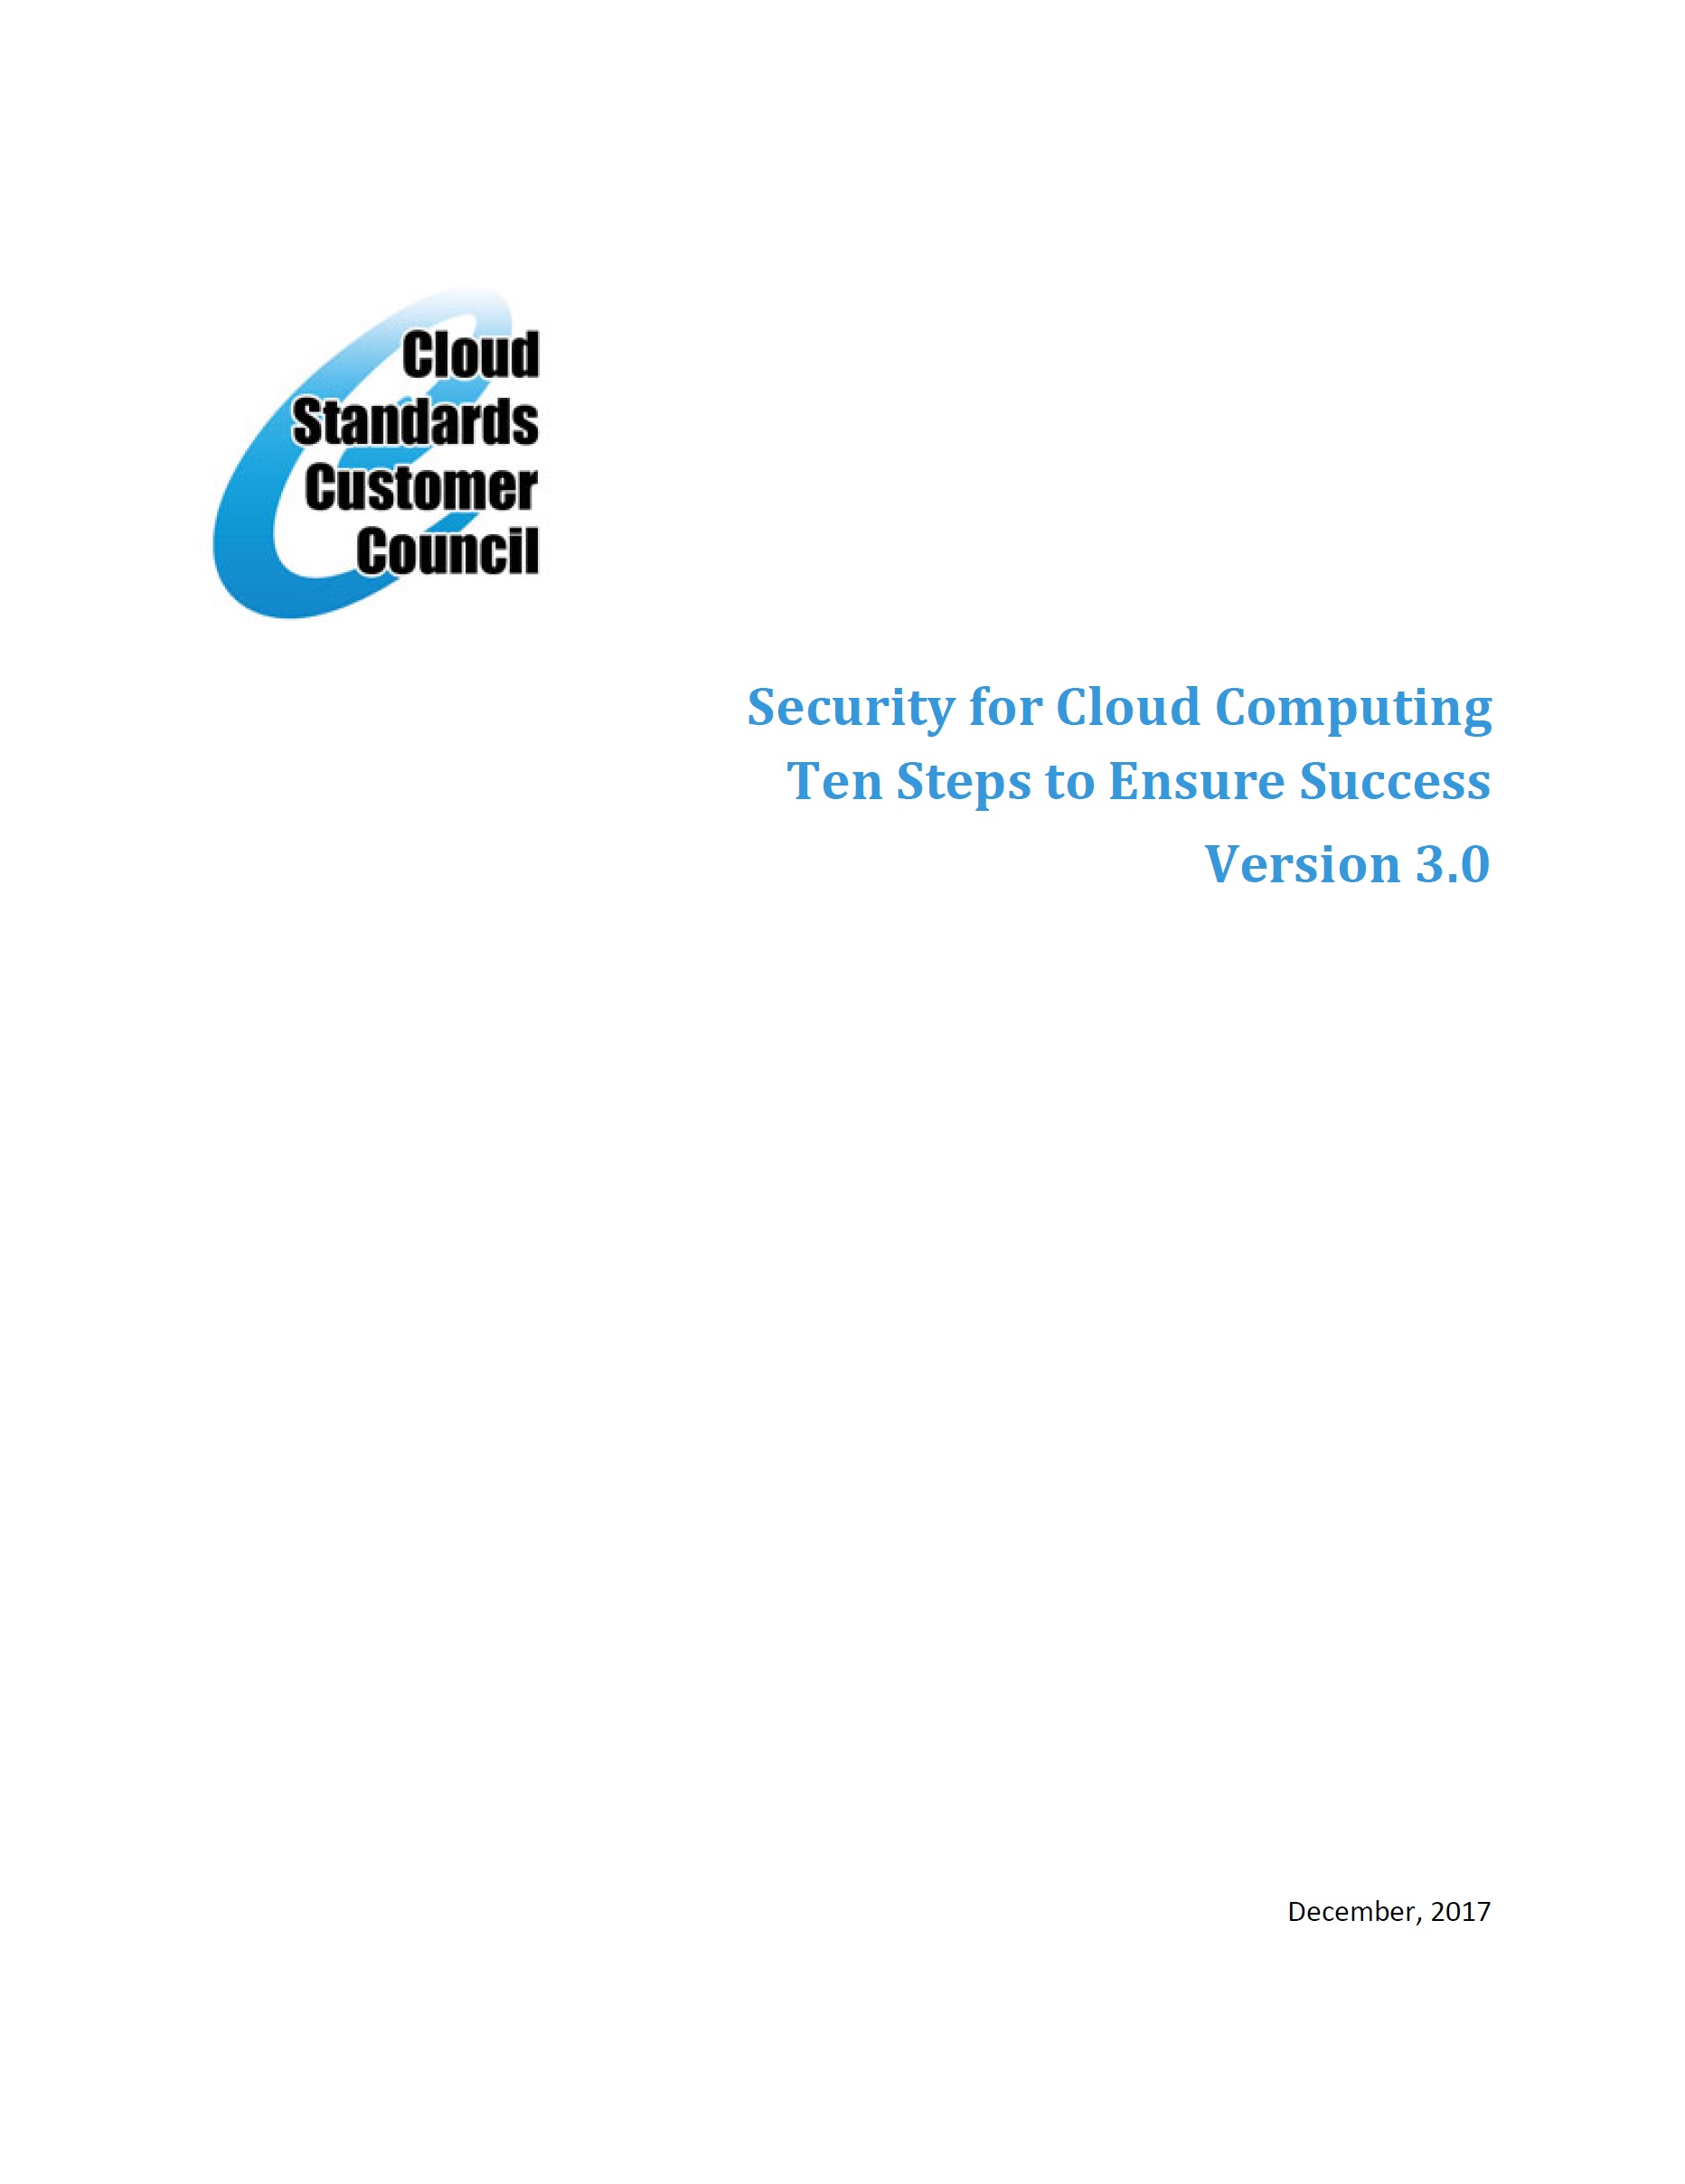 Security for Cloud Computing Ten Steps to Ensure Success – CSCC 2017